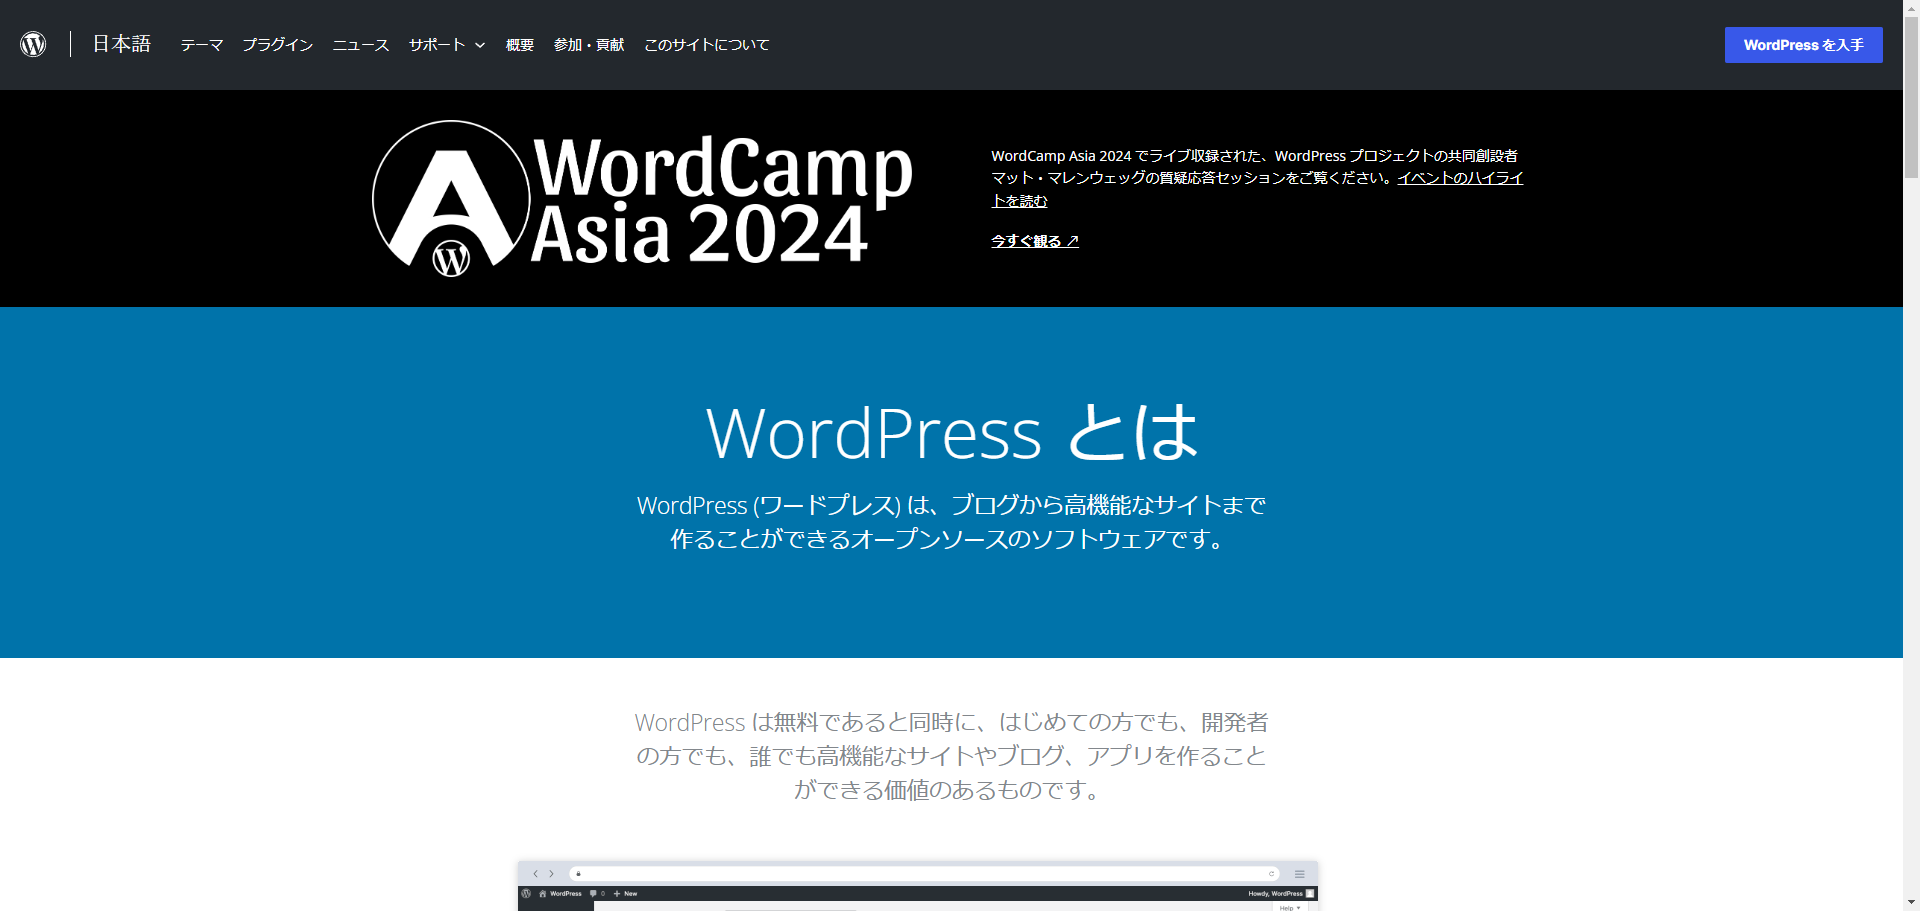 WordPress.org とは？